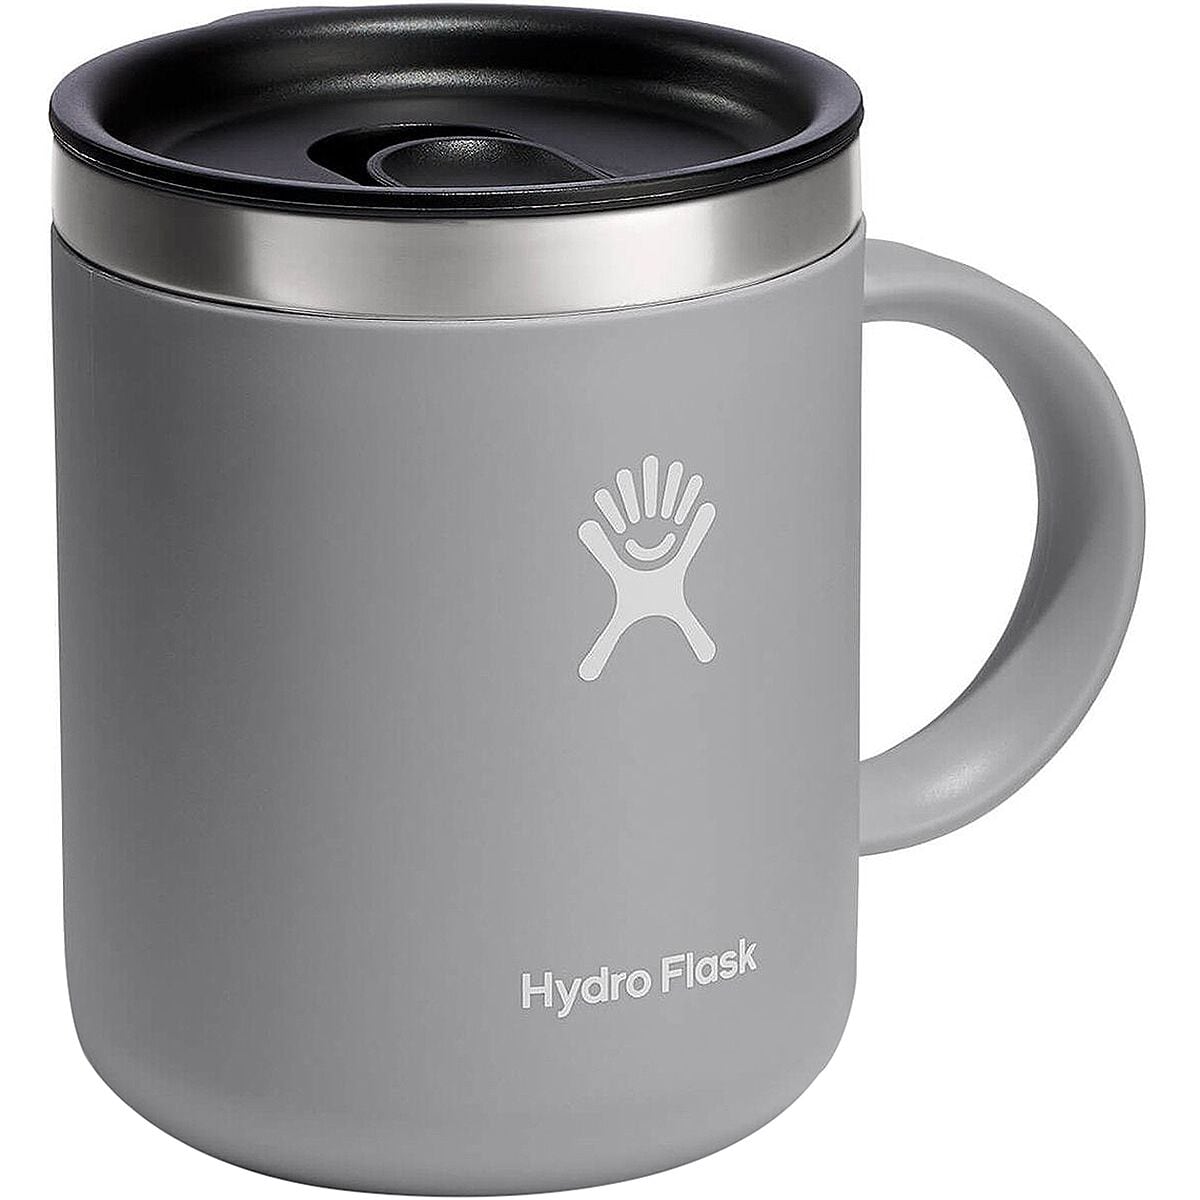 Hydro Flask Black Coffee Mug 12oz.